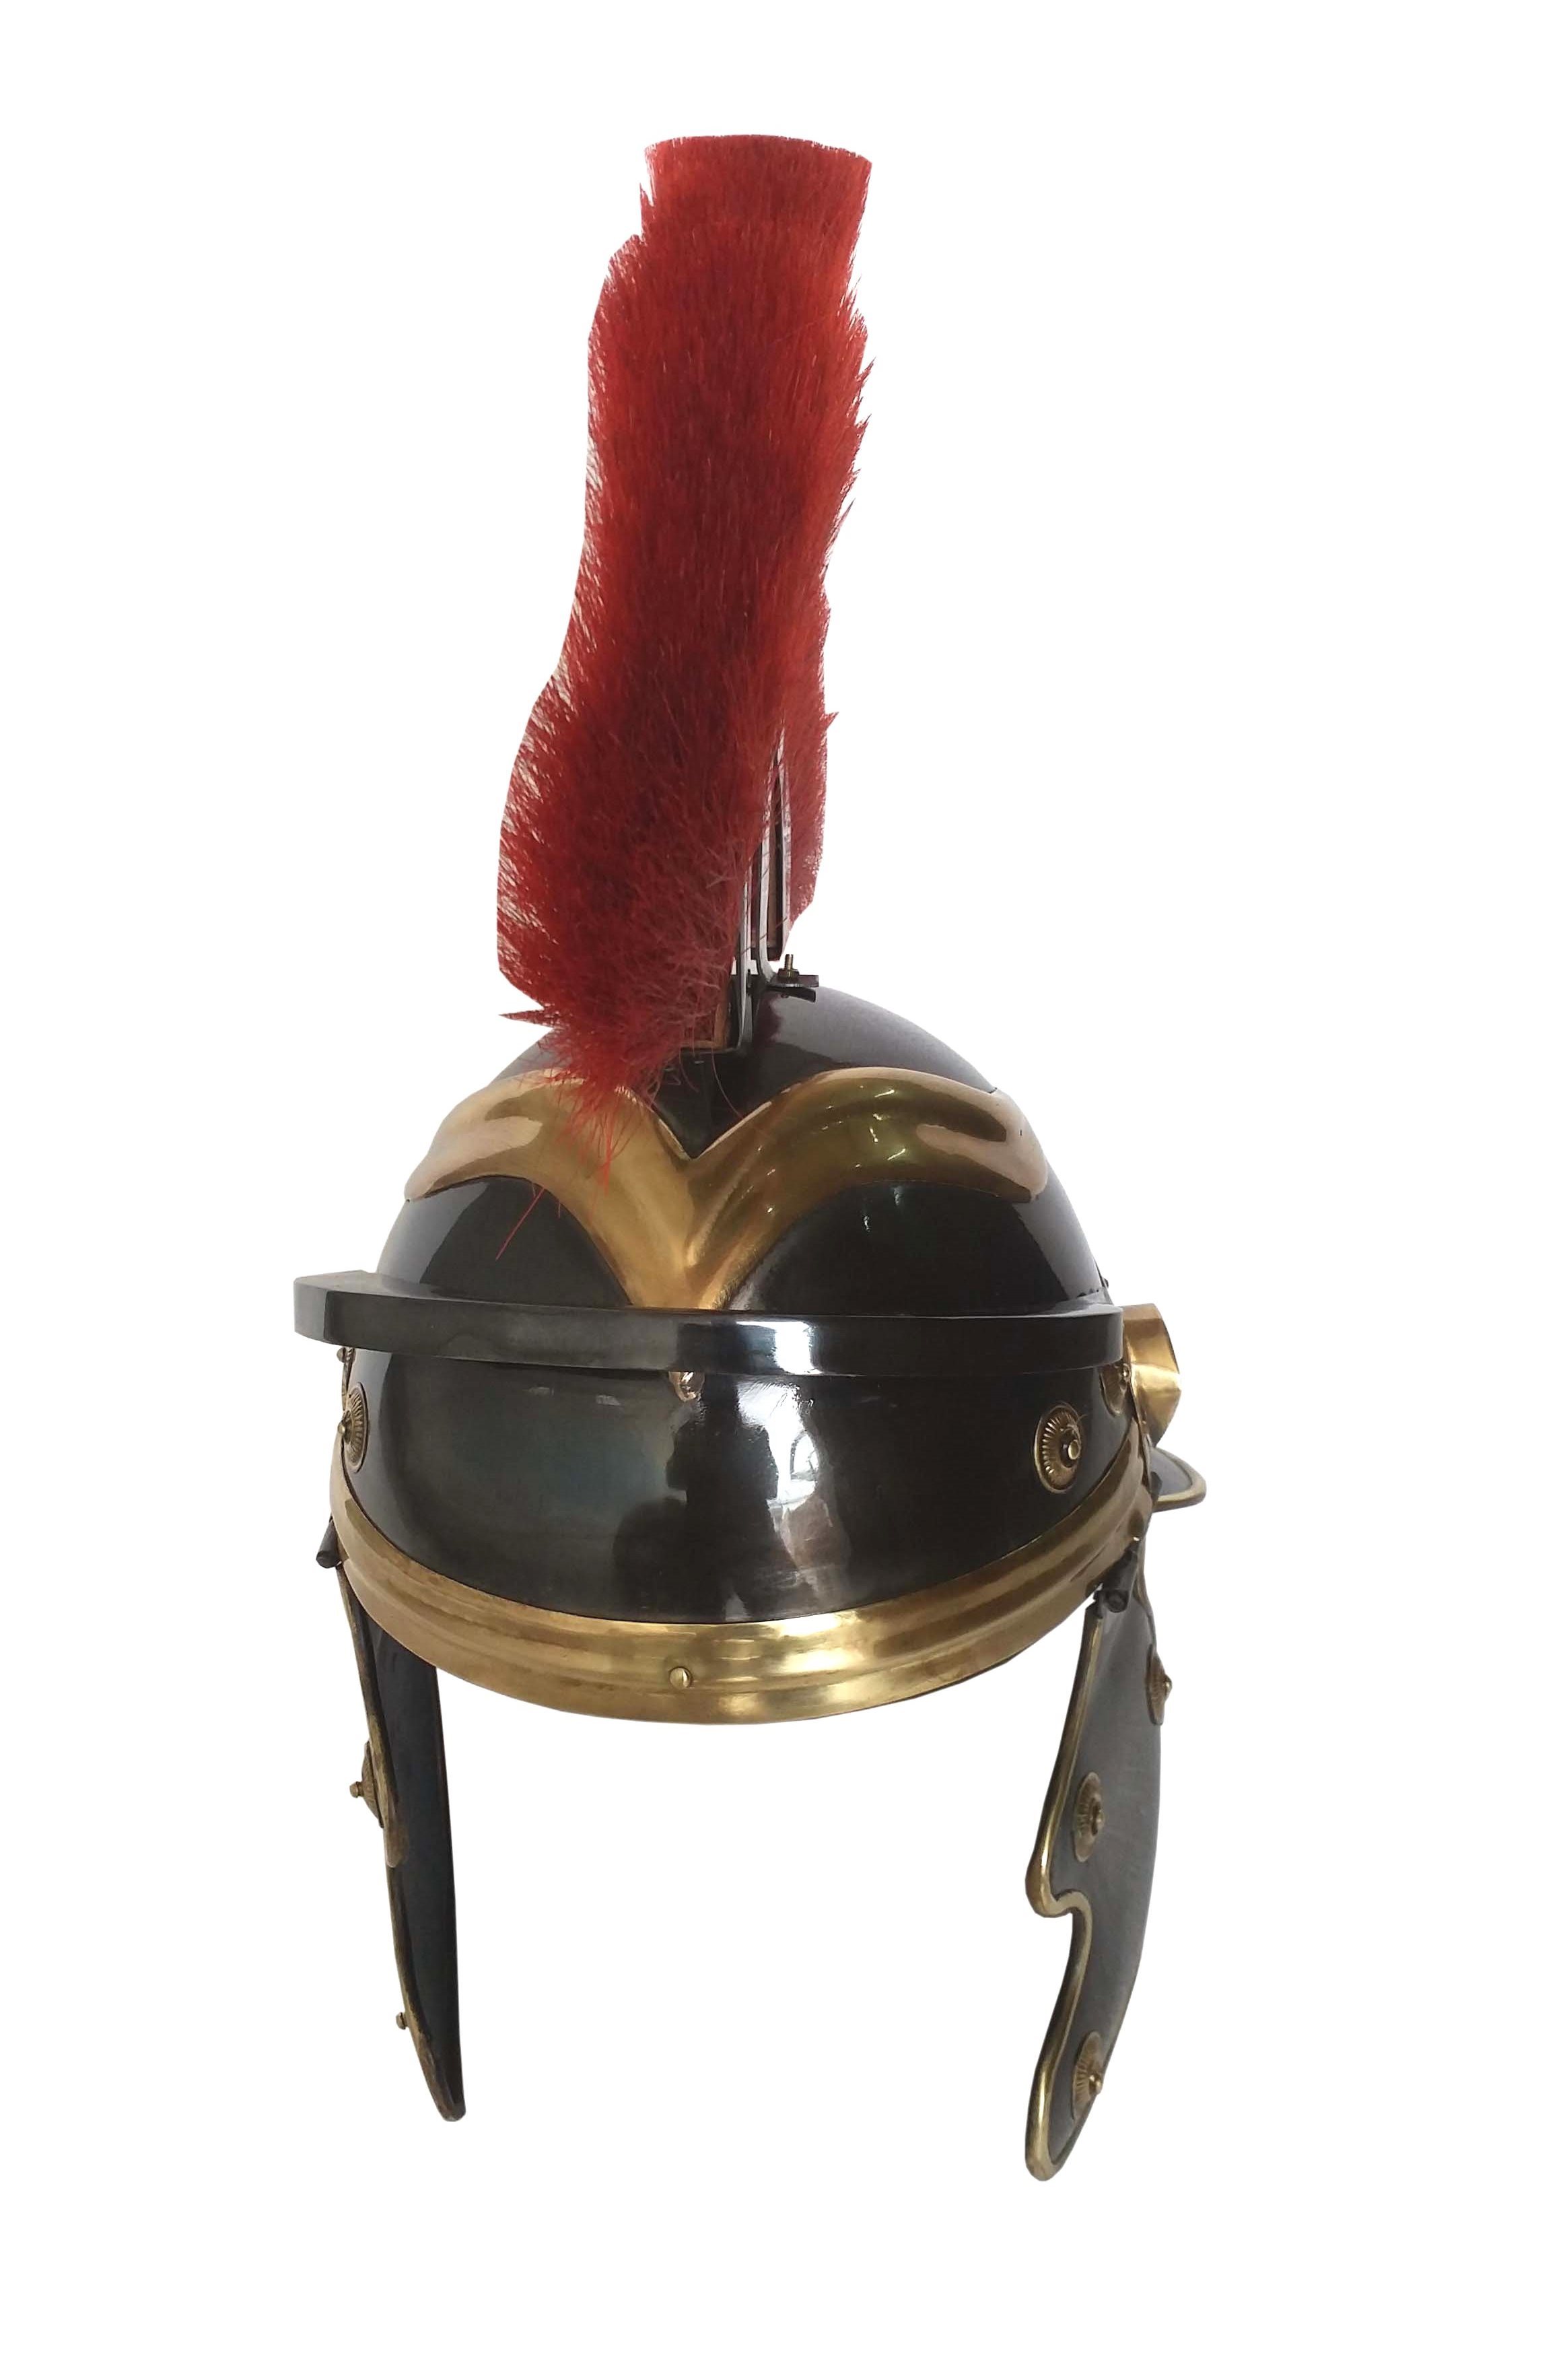 Black Antique Roman Centurion Armor Helmet with Red Plume ~ Roman Armour Helmet w/Crest